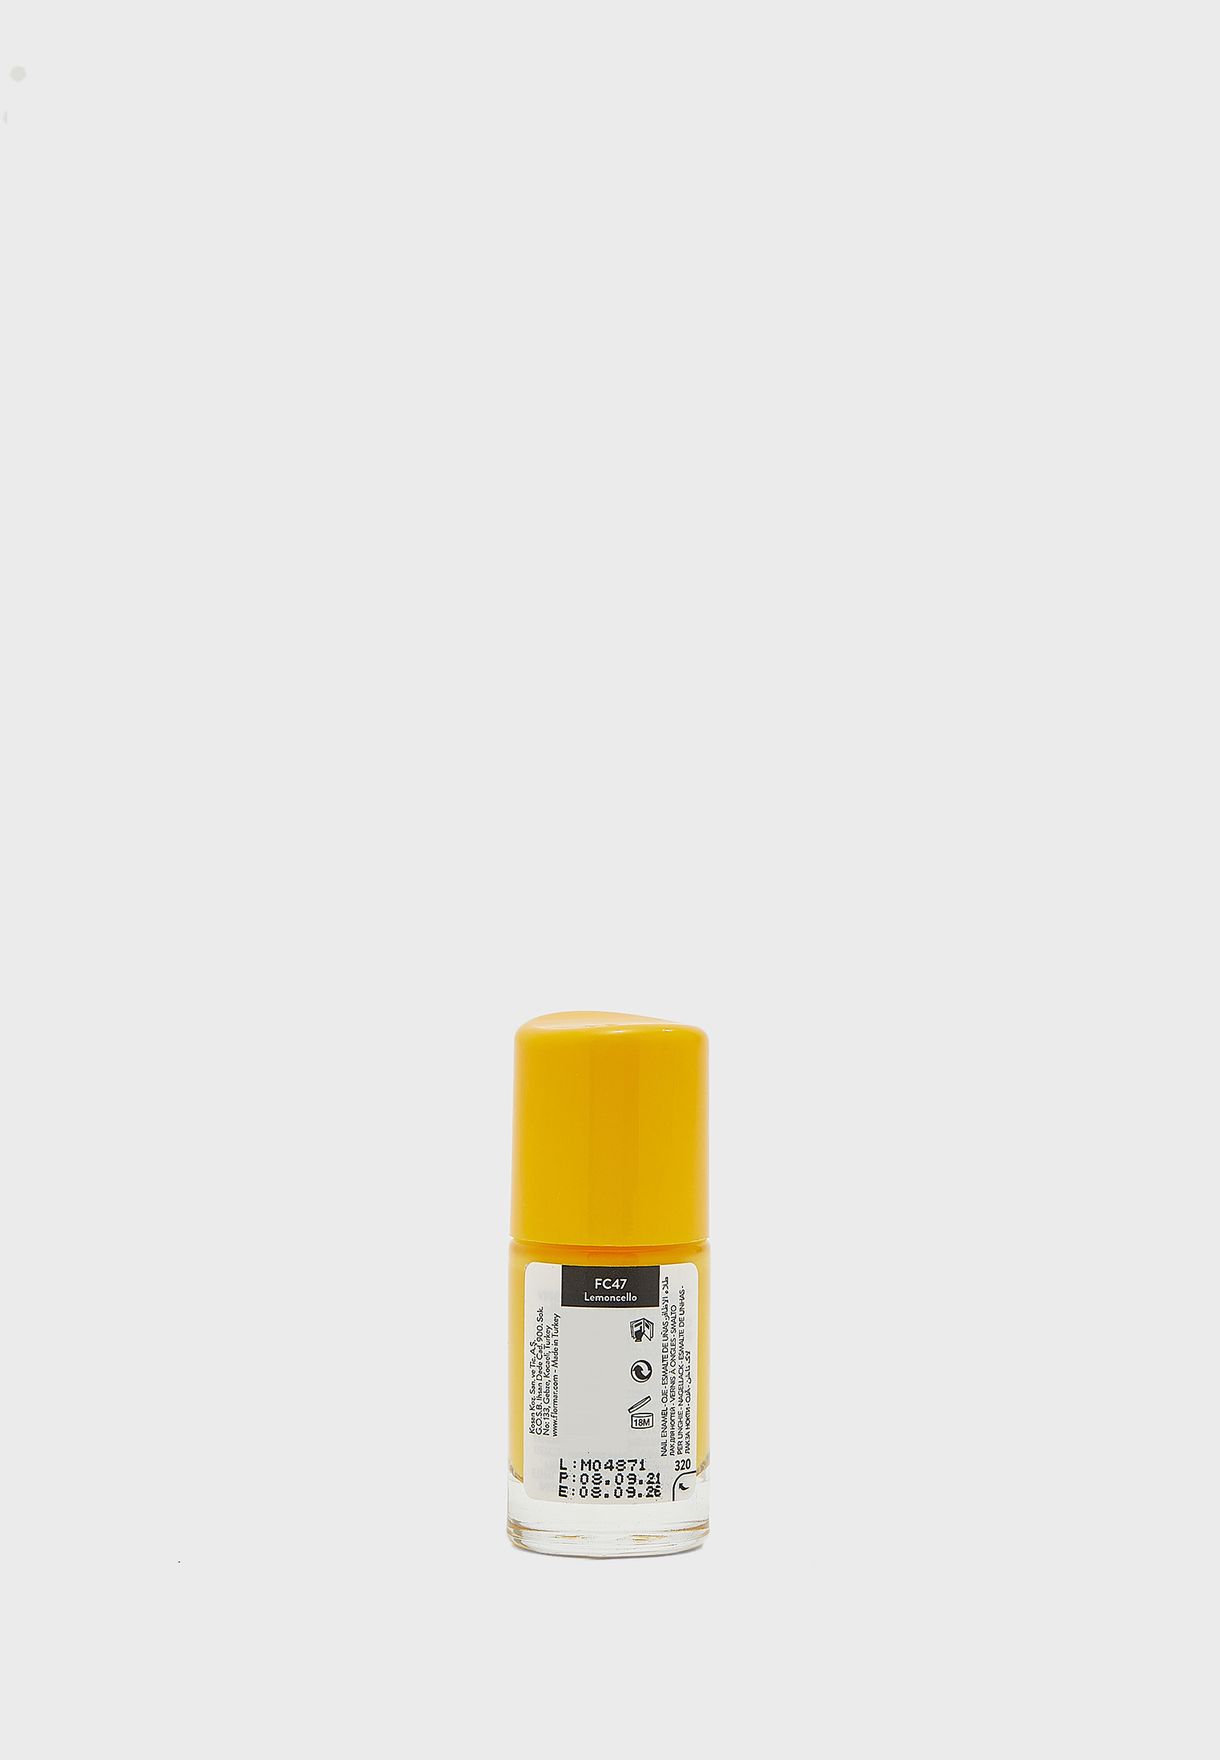 Full Color Nail Enamel - Fc47 Lemoncello